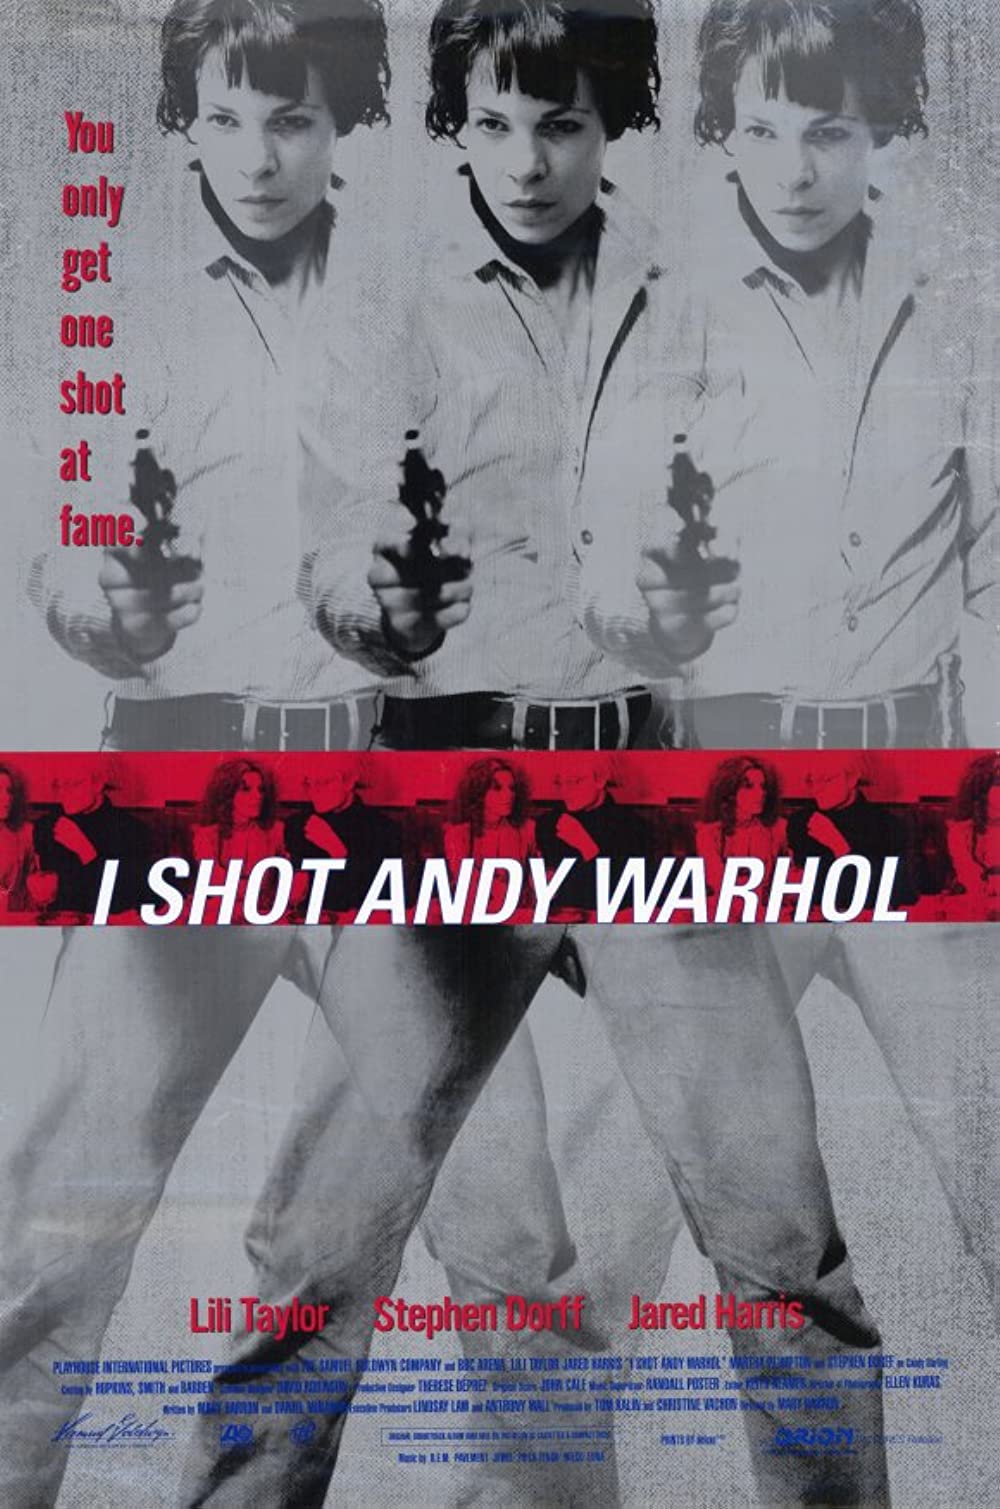 Filmbeschreibung zu I Shot Andy Warhol